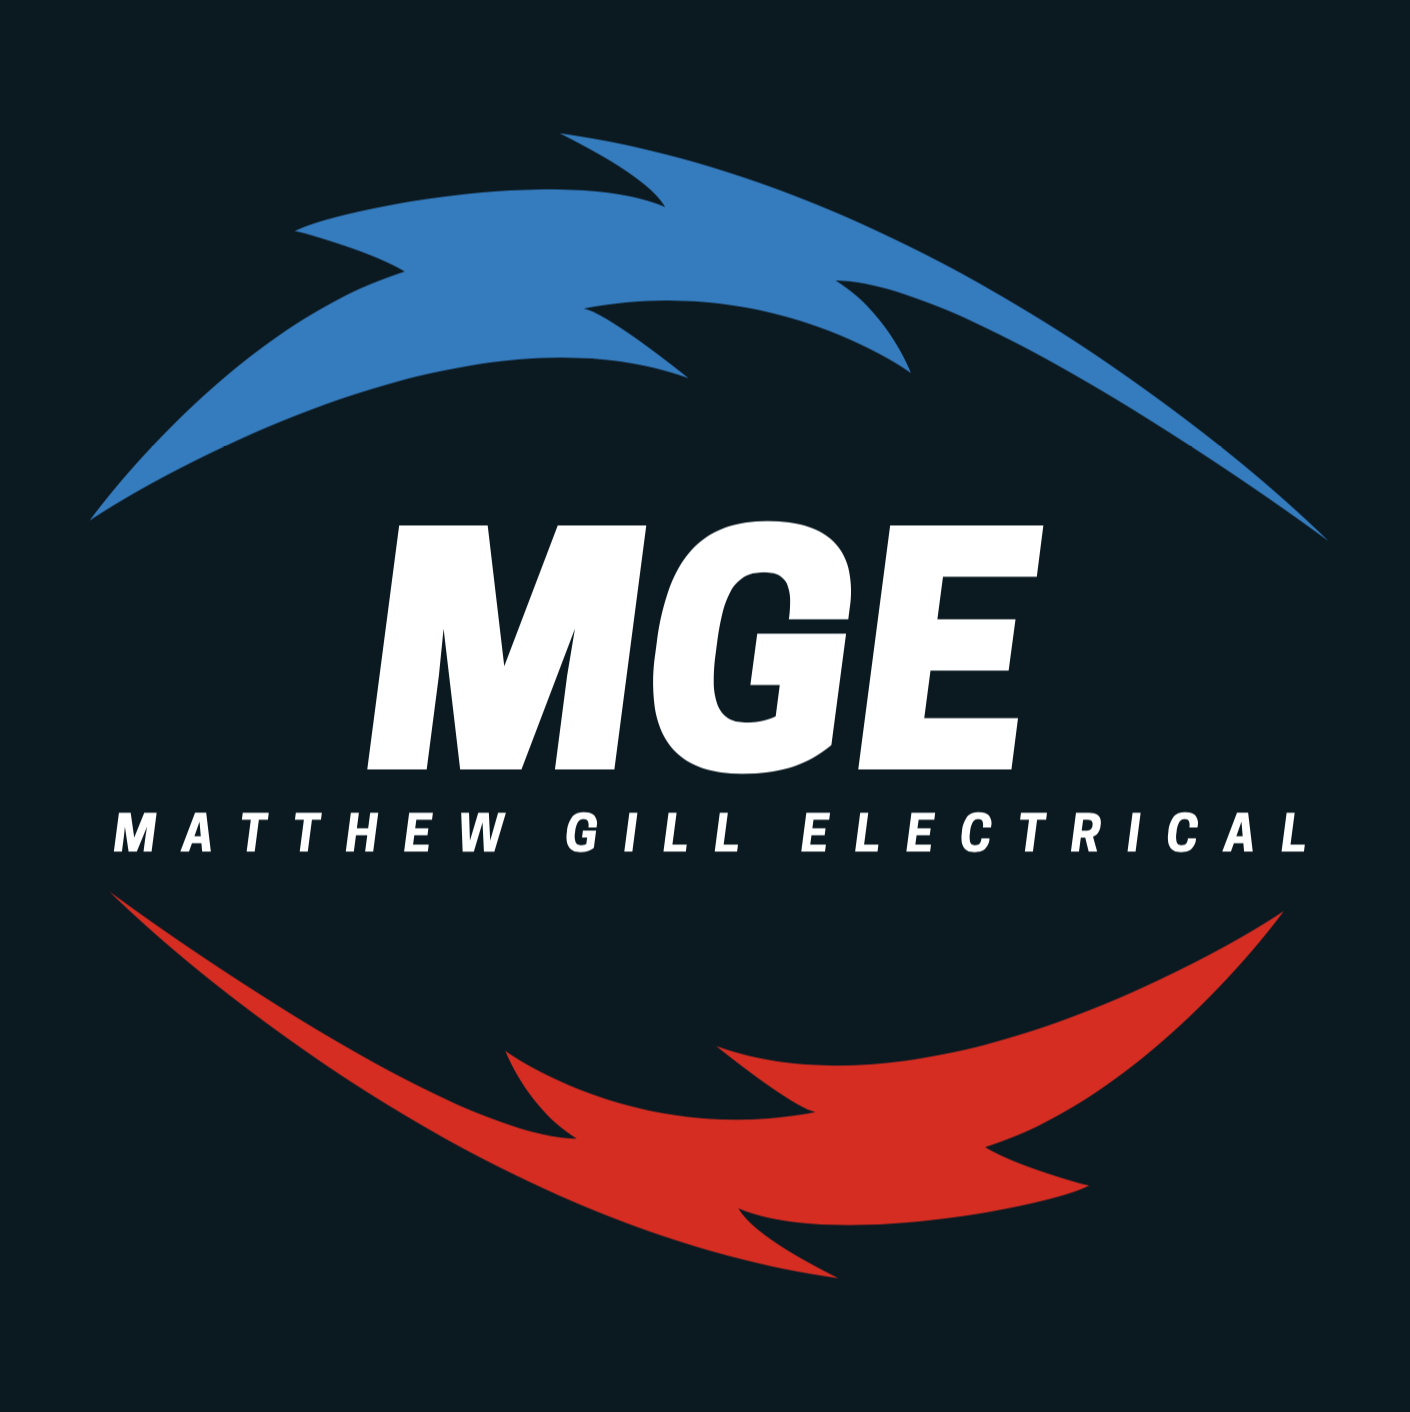 Matthew Gill Electrical MGE